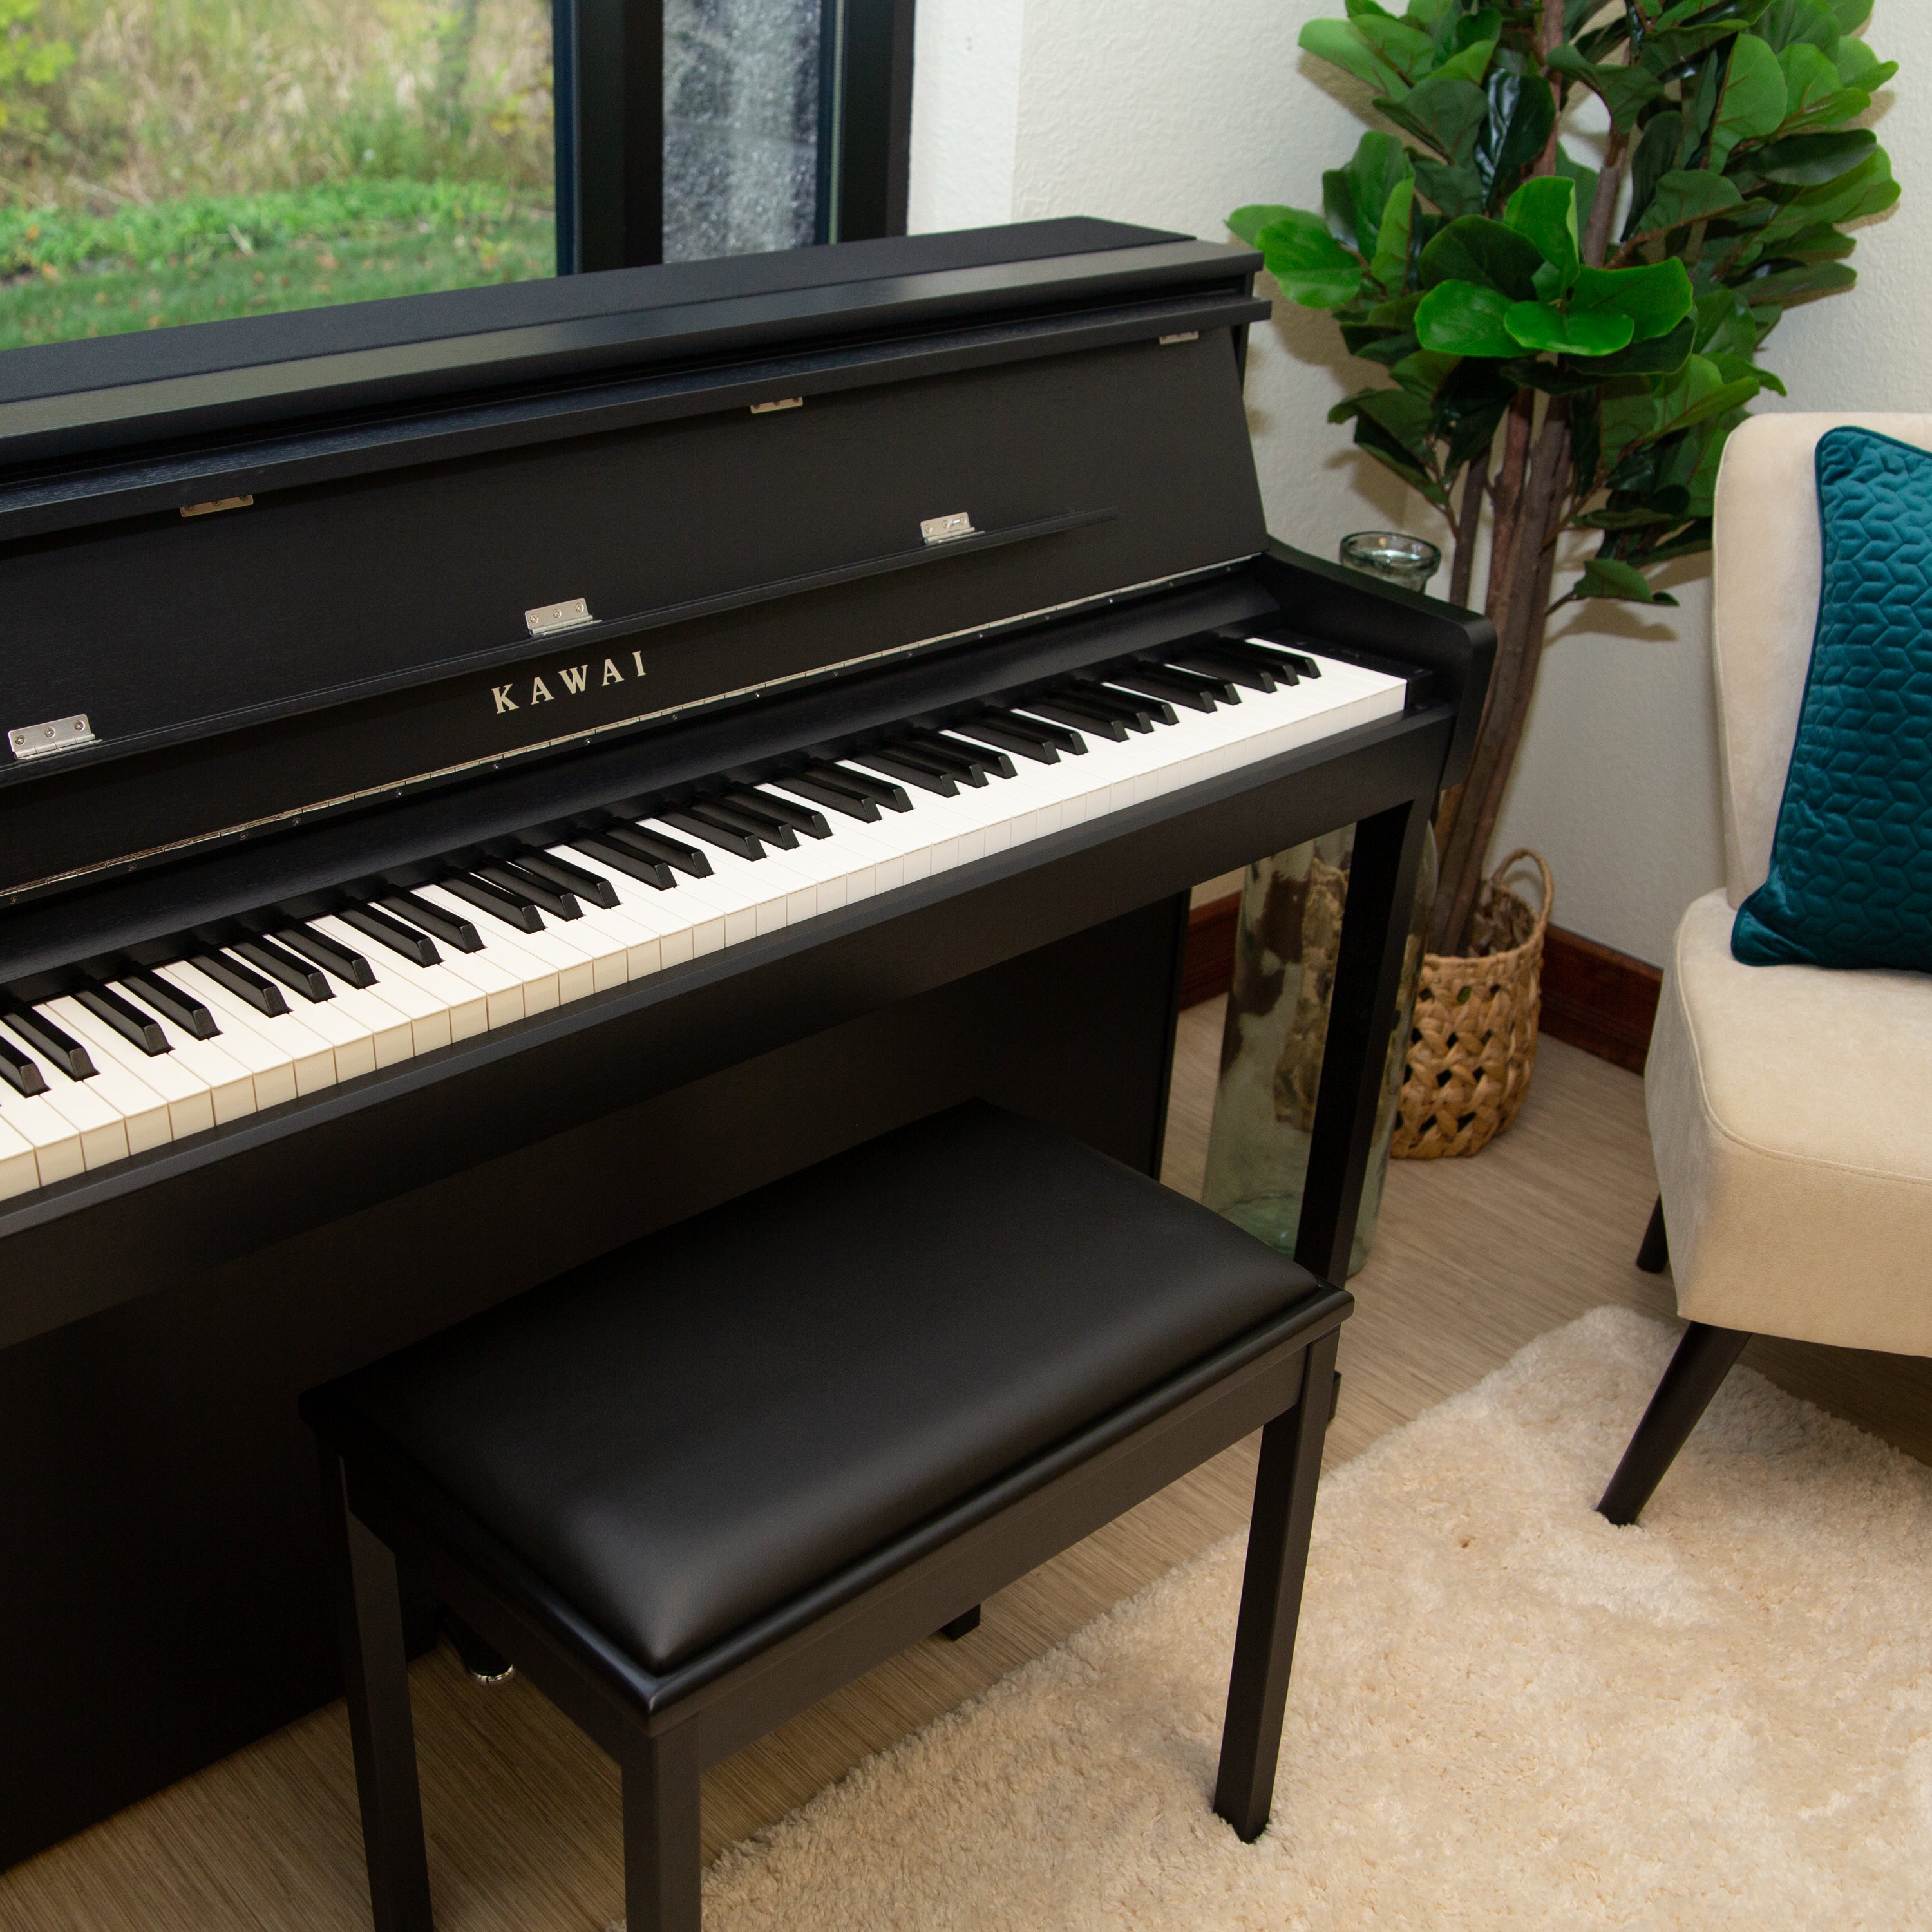 Kawai CA901 Digital Piano - Satin Black - facing right in a stylish living room